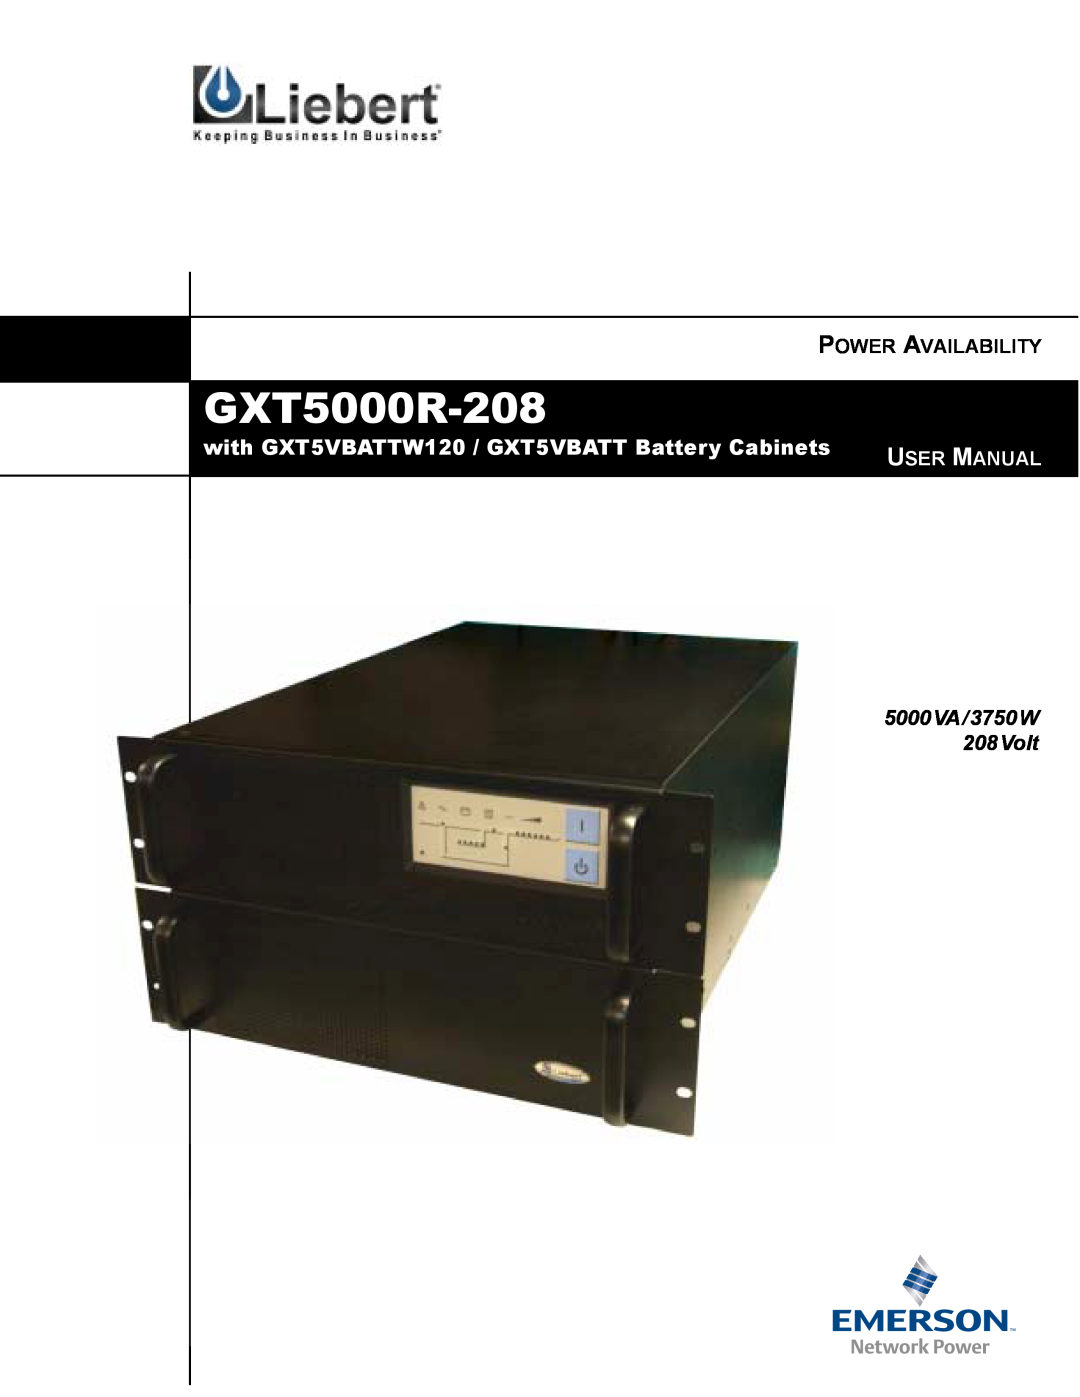 Emerson GXT5000R-208 user manual with GXT5VBATTW120 / GXT5VBATT Battery Cabinets, 5000VA/3750W 208Volt 